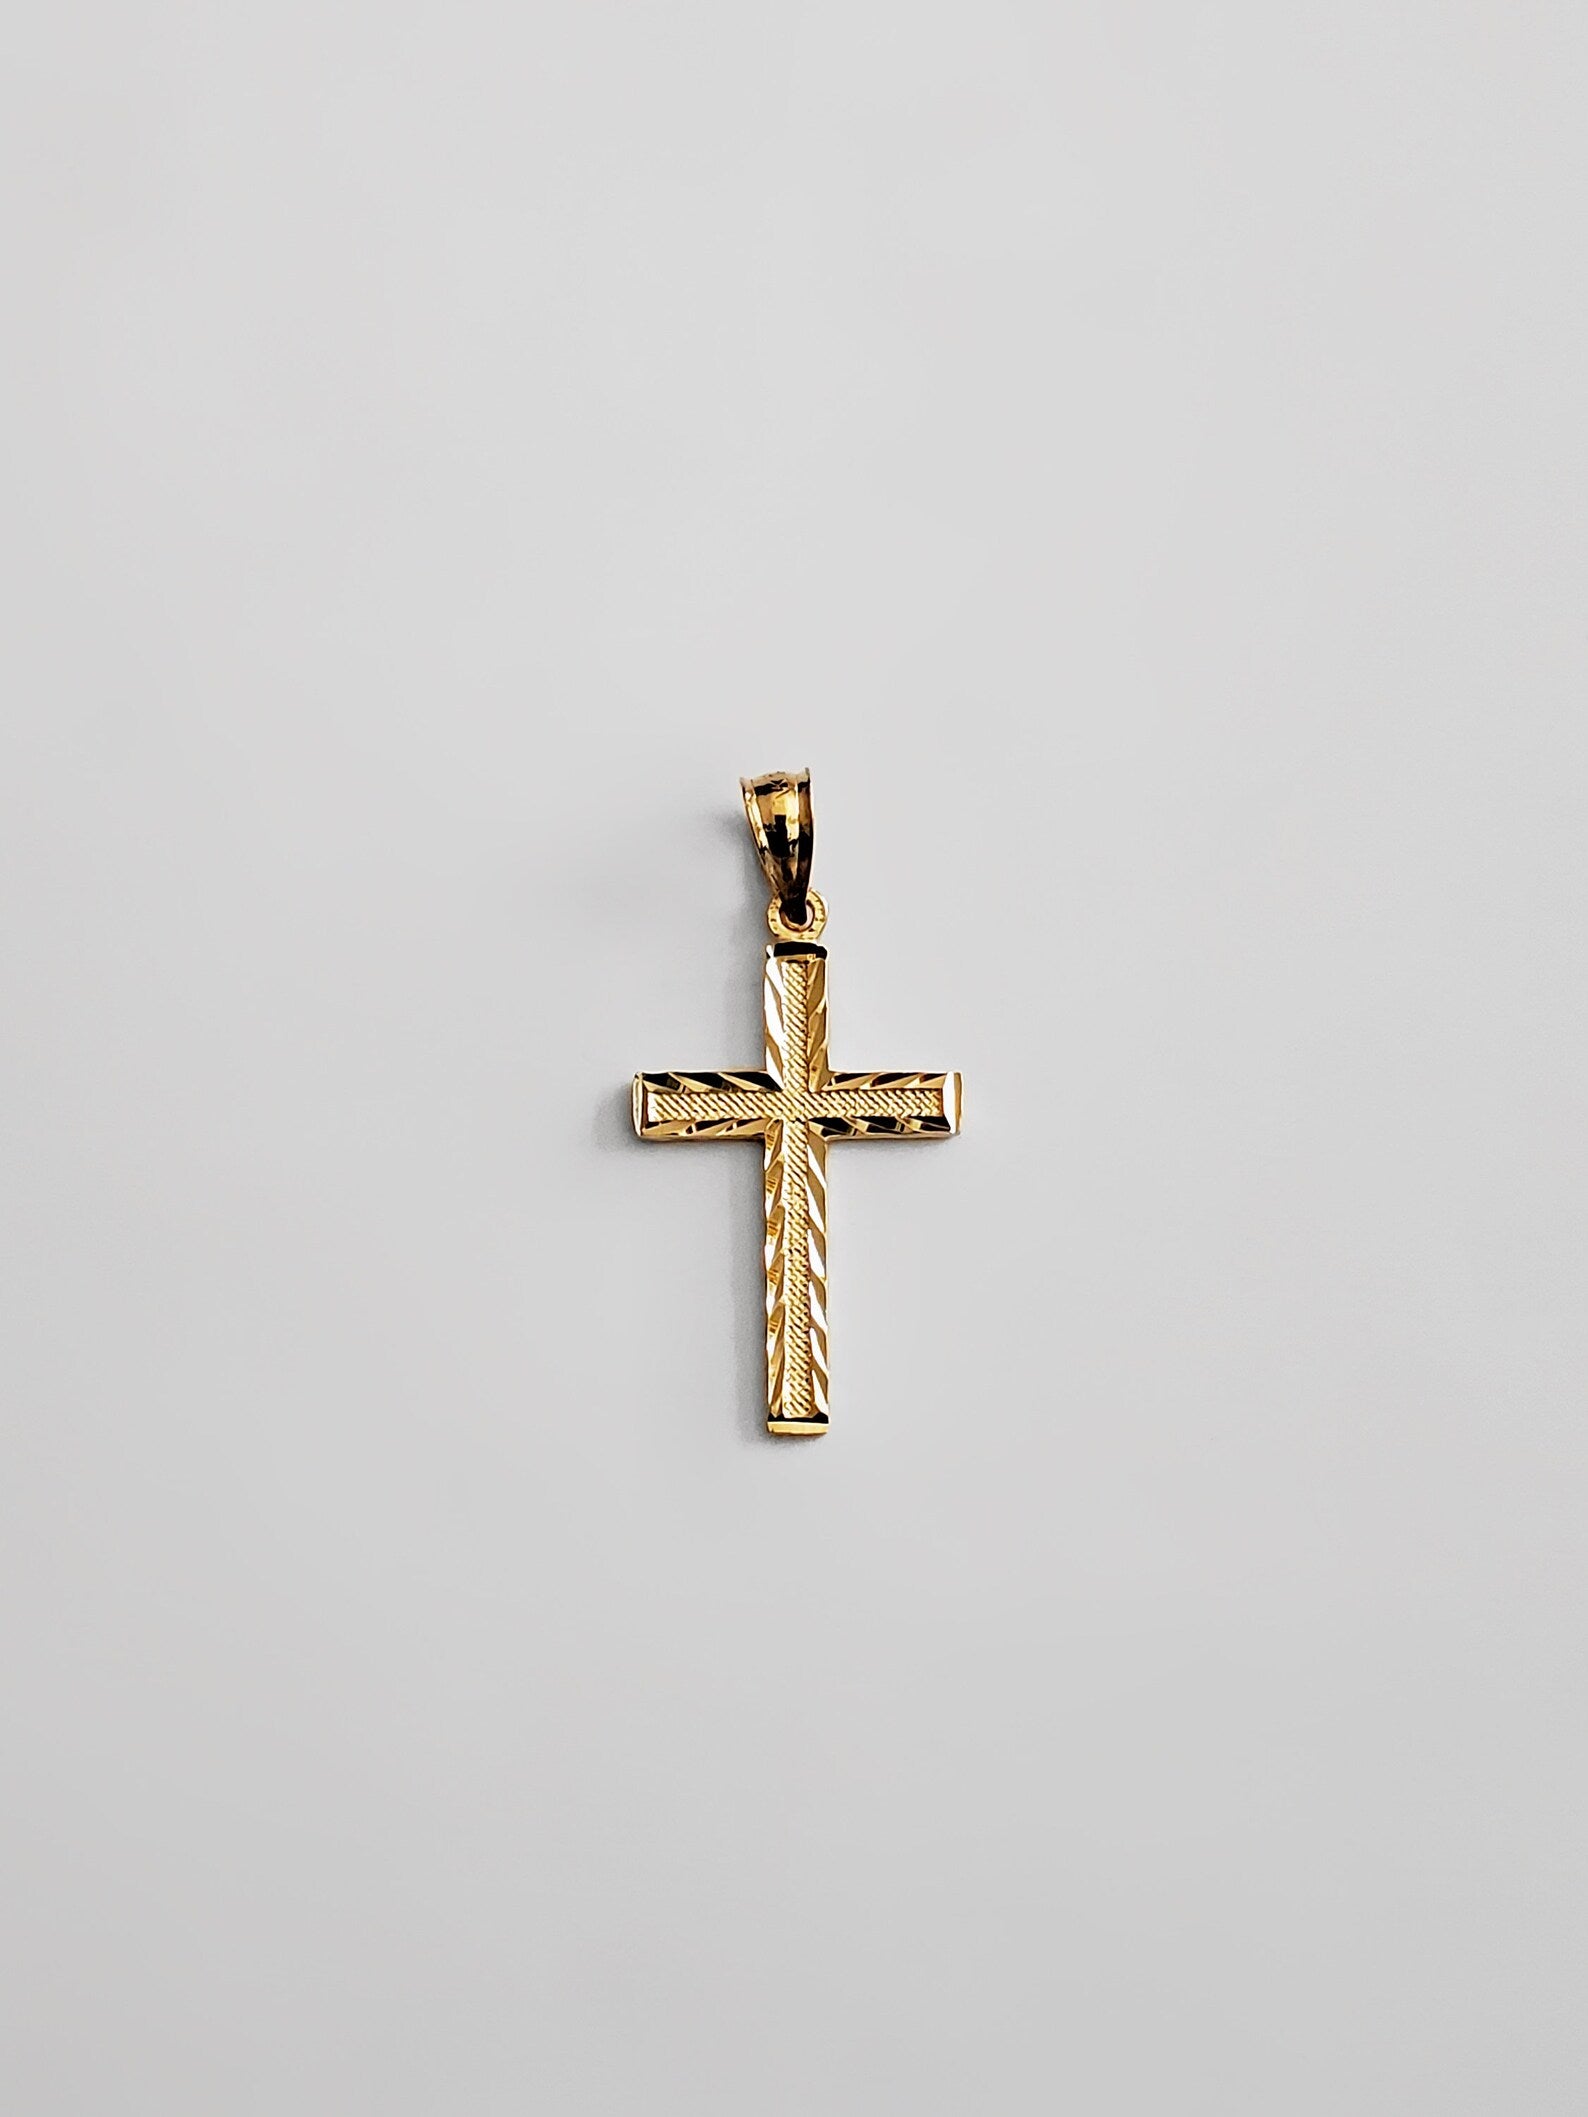 14k Real Gold Diamond Cut Cross Pendant Model-2225 - Charlie & Co. Jewelry